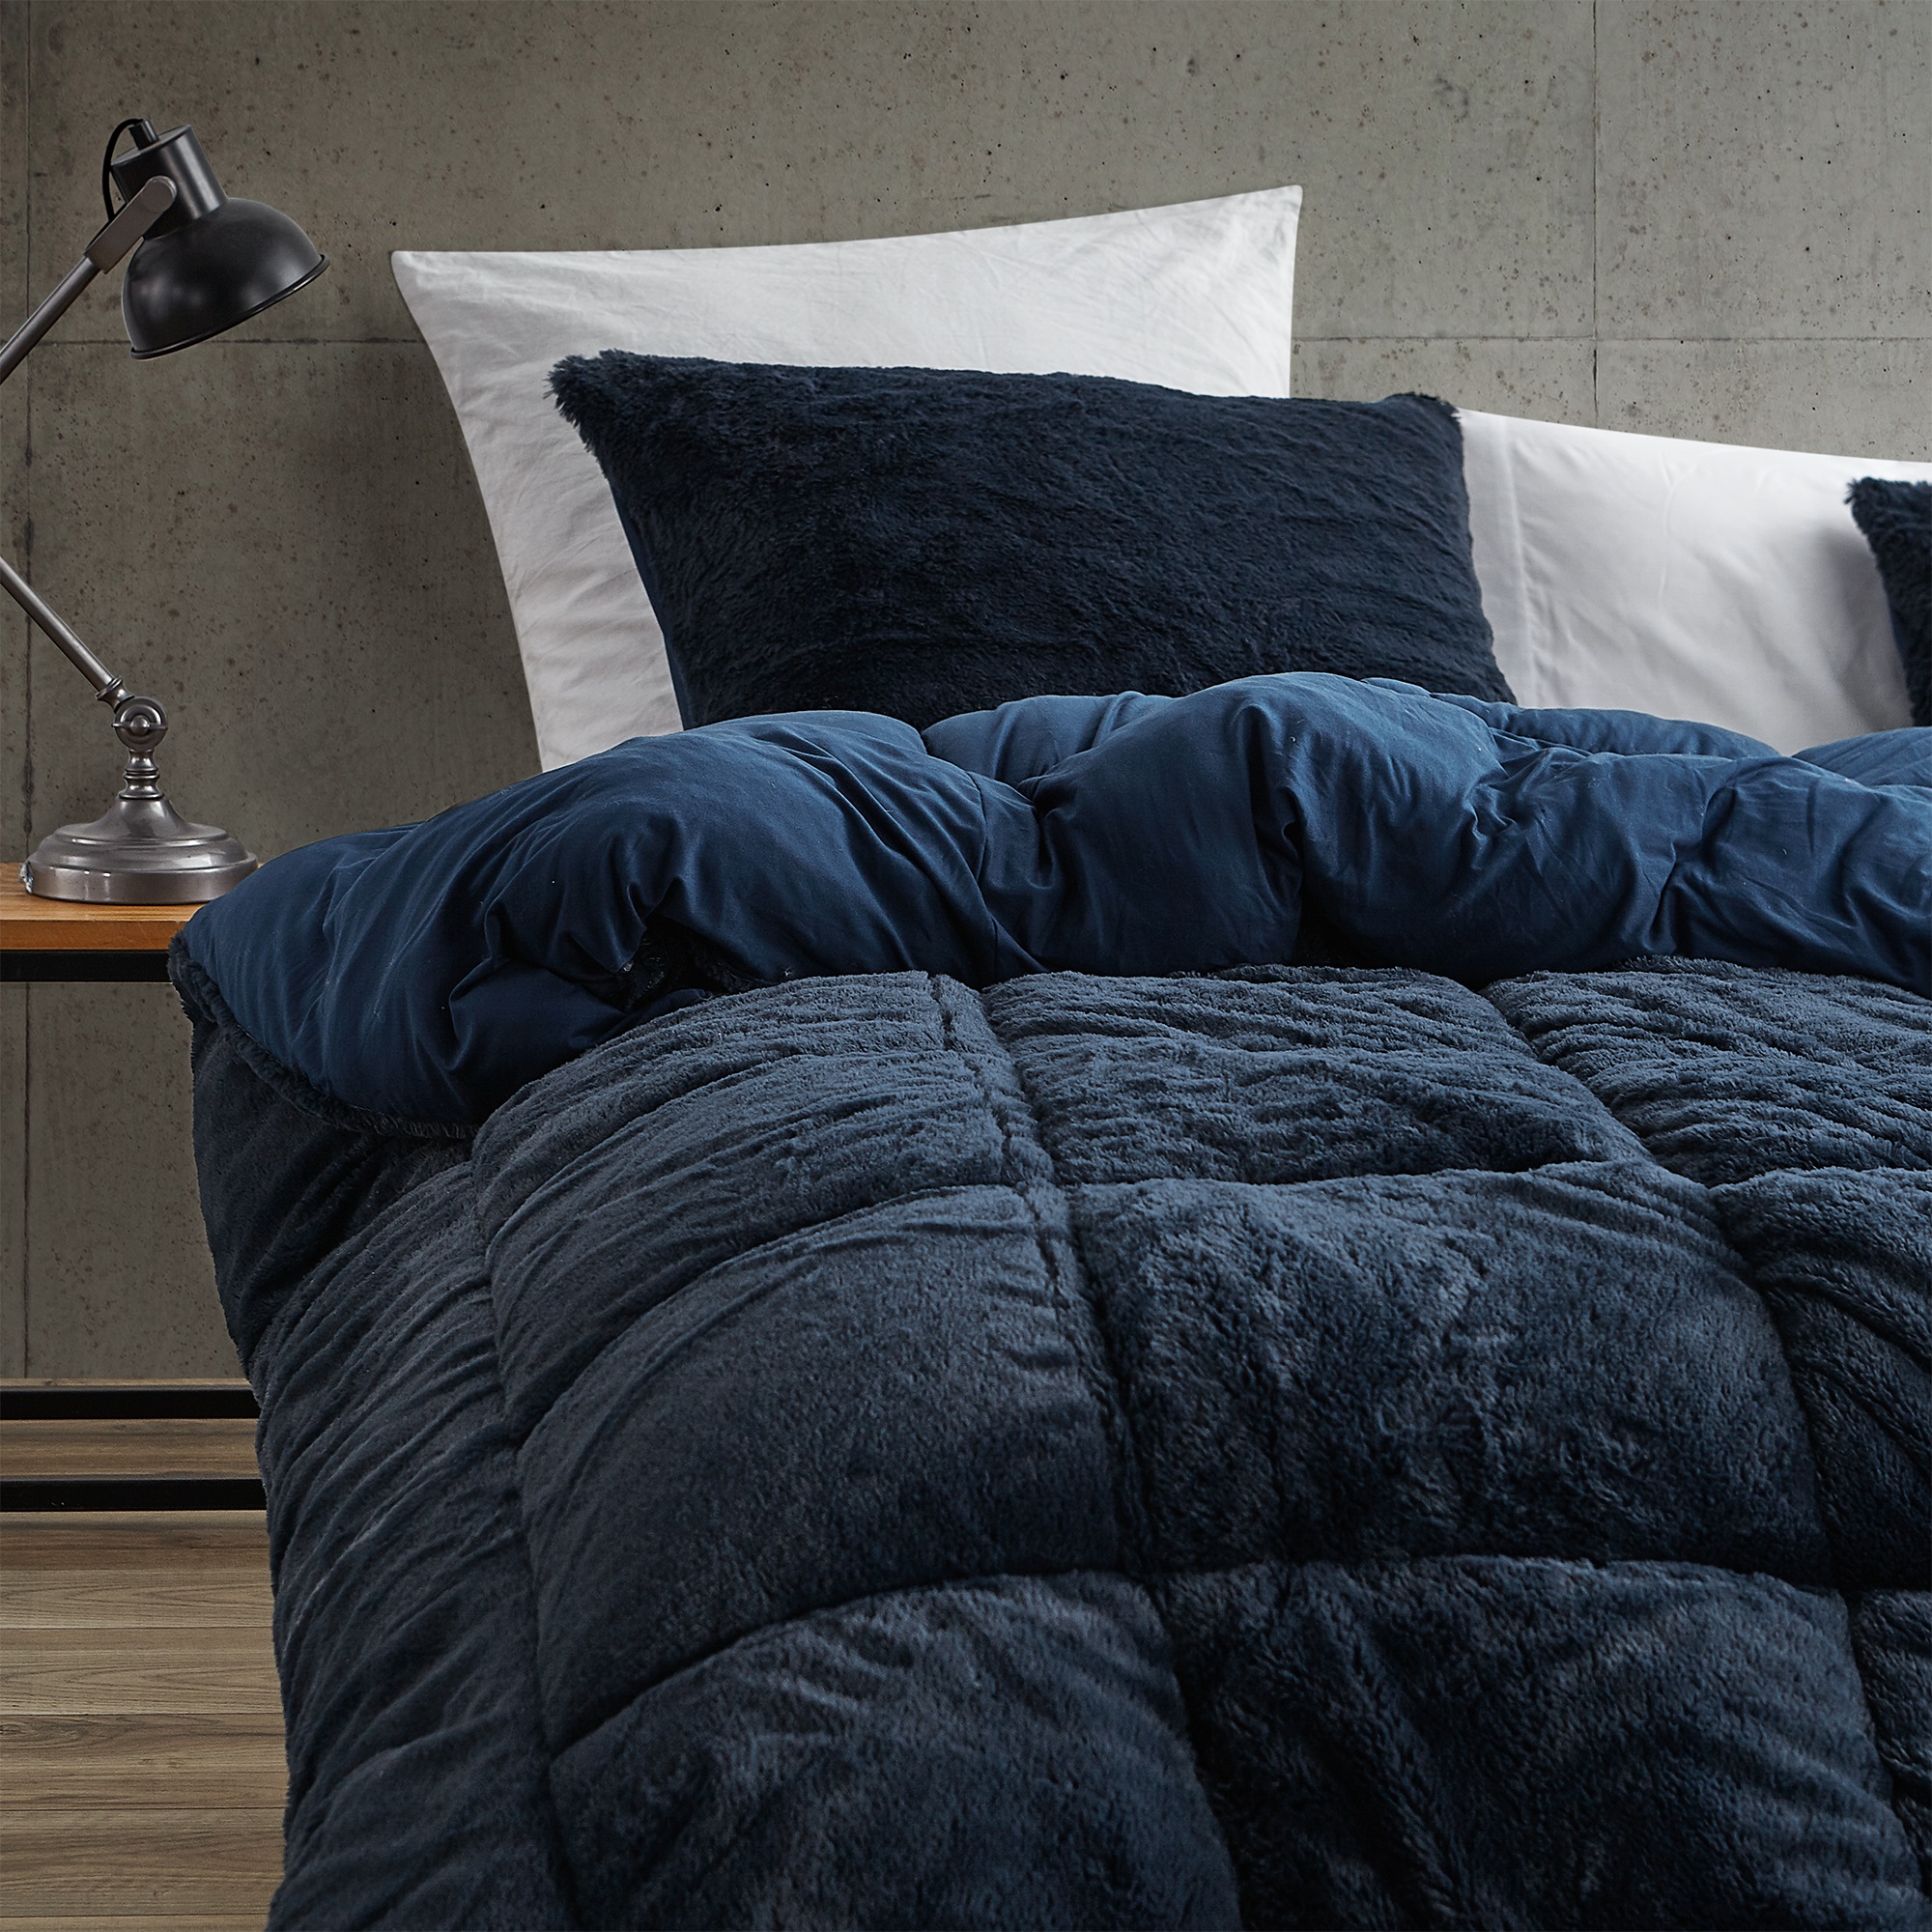 Are You Kidding Bare - Coma Inducer® Oversized Comforter - Nightfall Navy